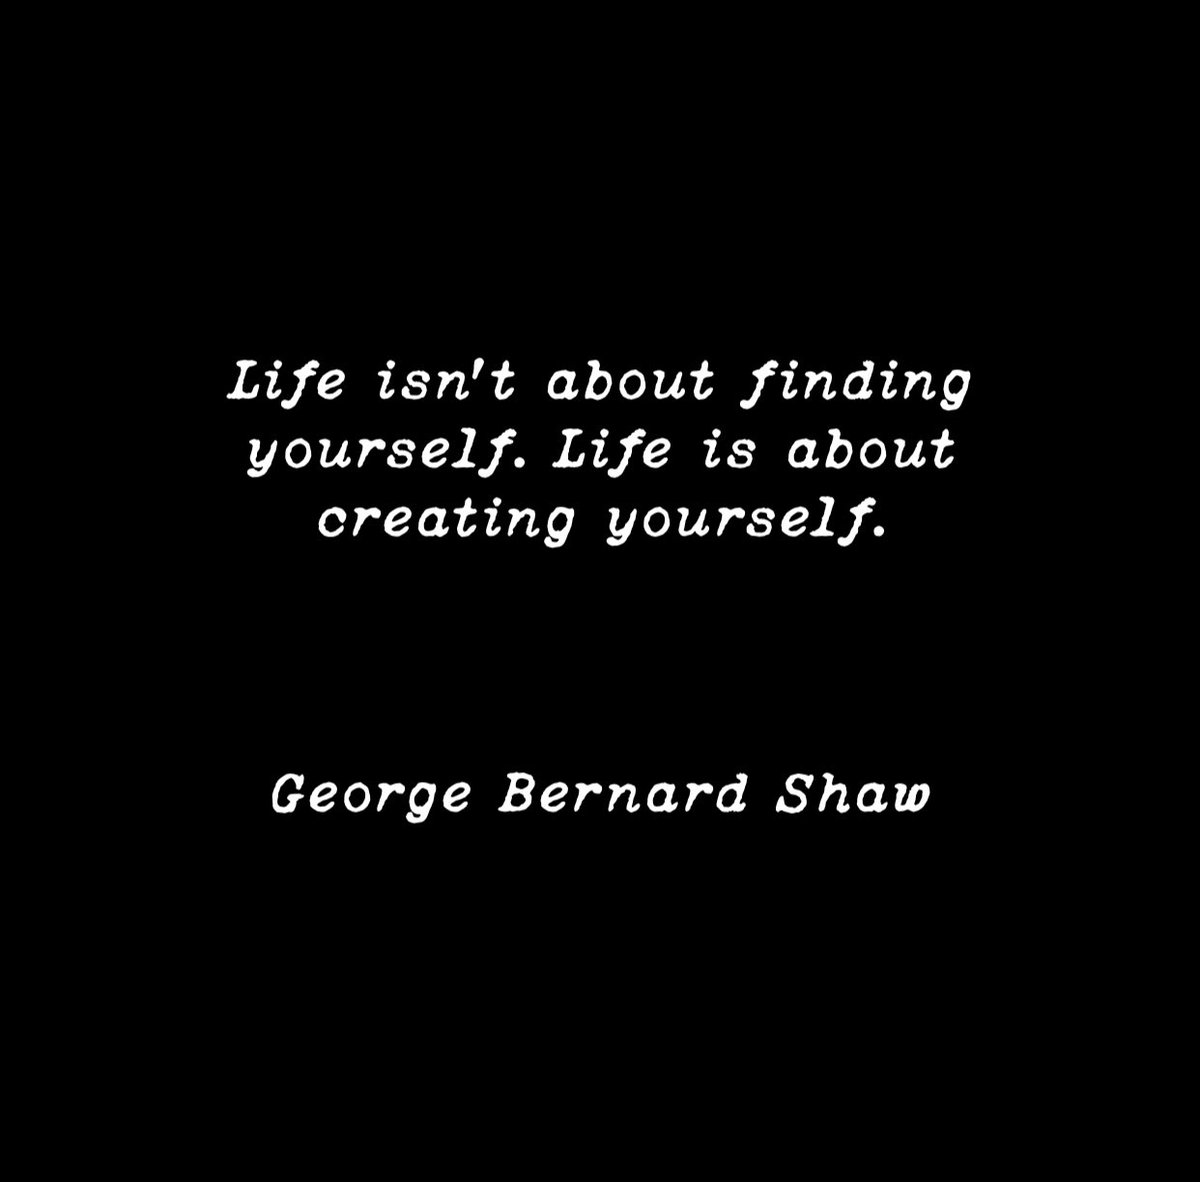 #georgebernardshaw #quote